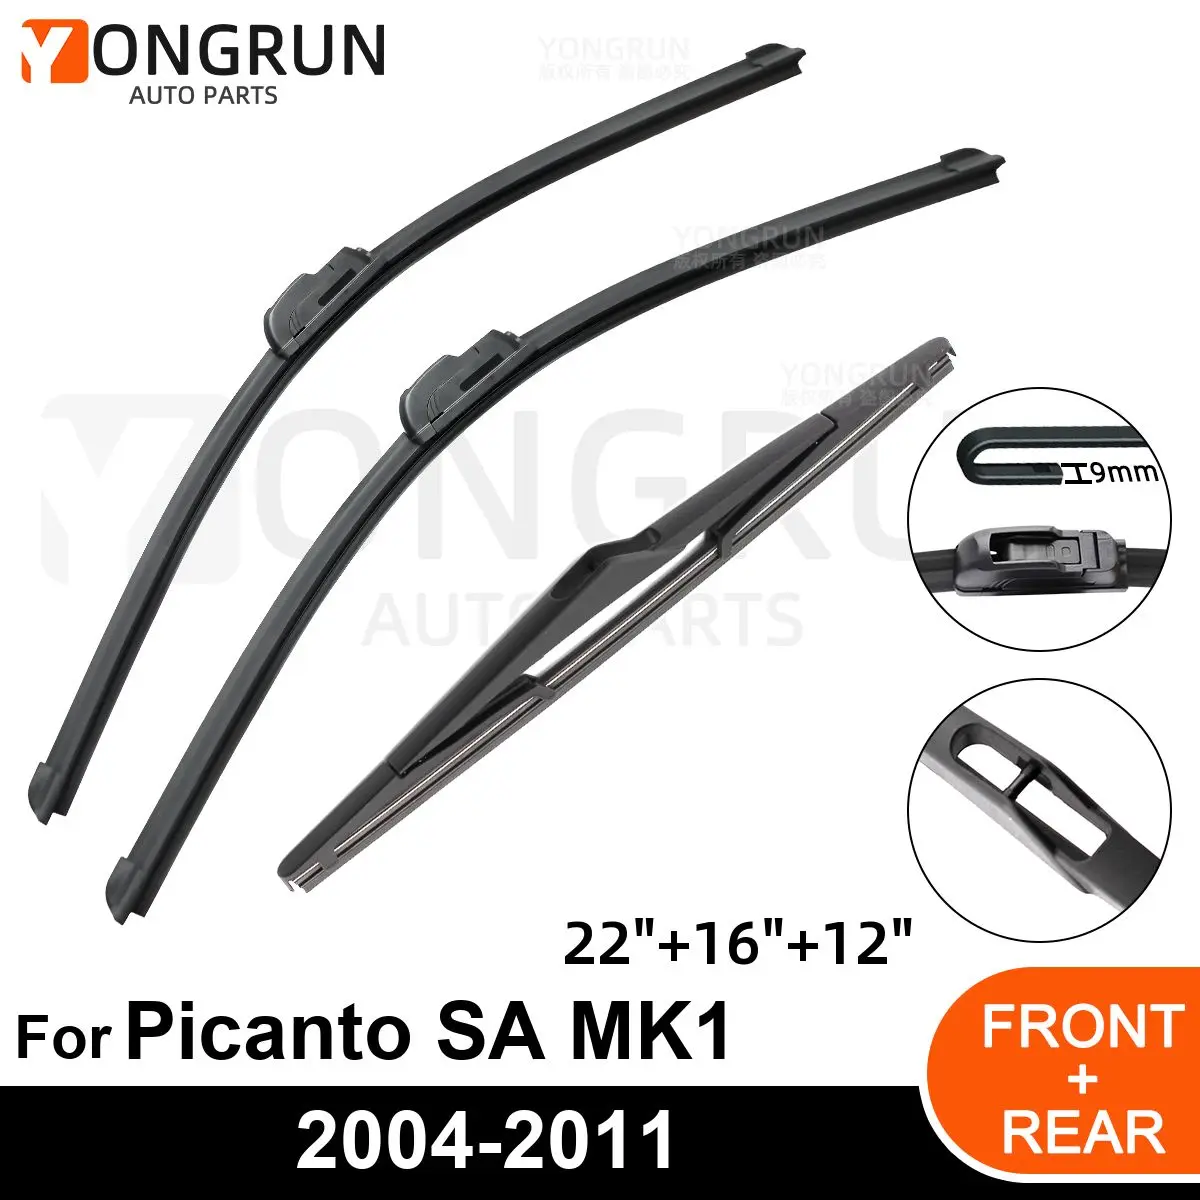 

Car Windshield Windscreen Front Rear Wiper Blade Rubber Accessories For KIA Picanto SA MK1 Hatchback 22"16"12" 2004 - 2010 2011